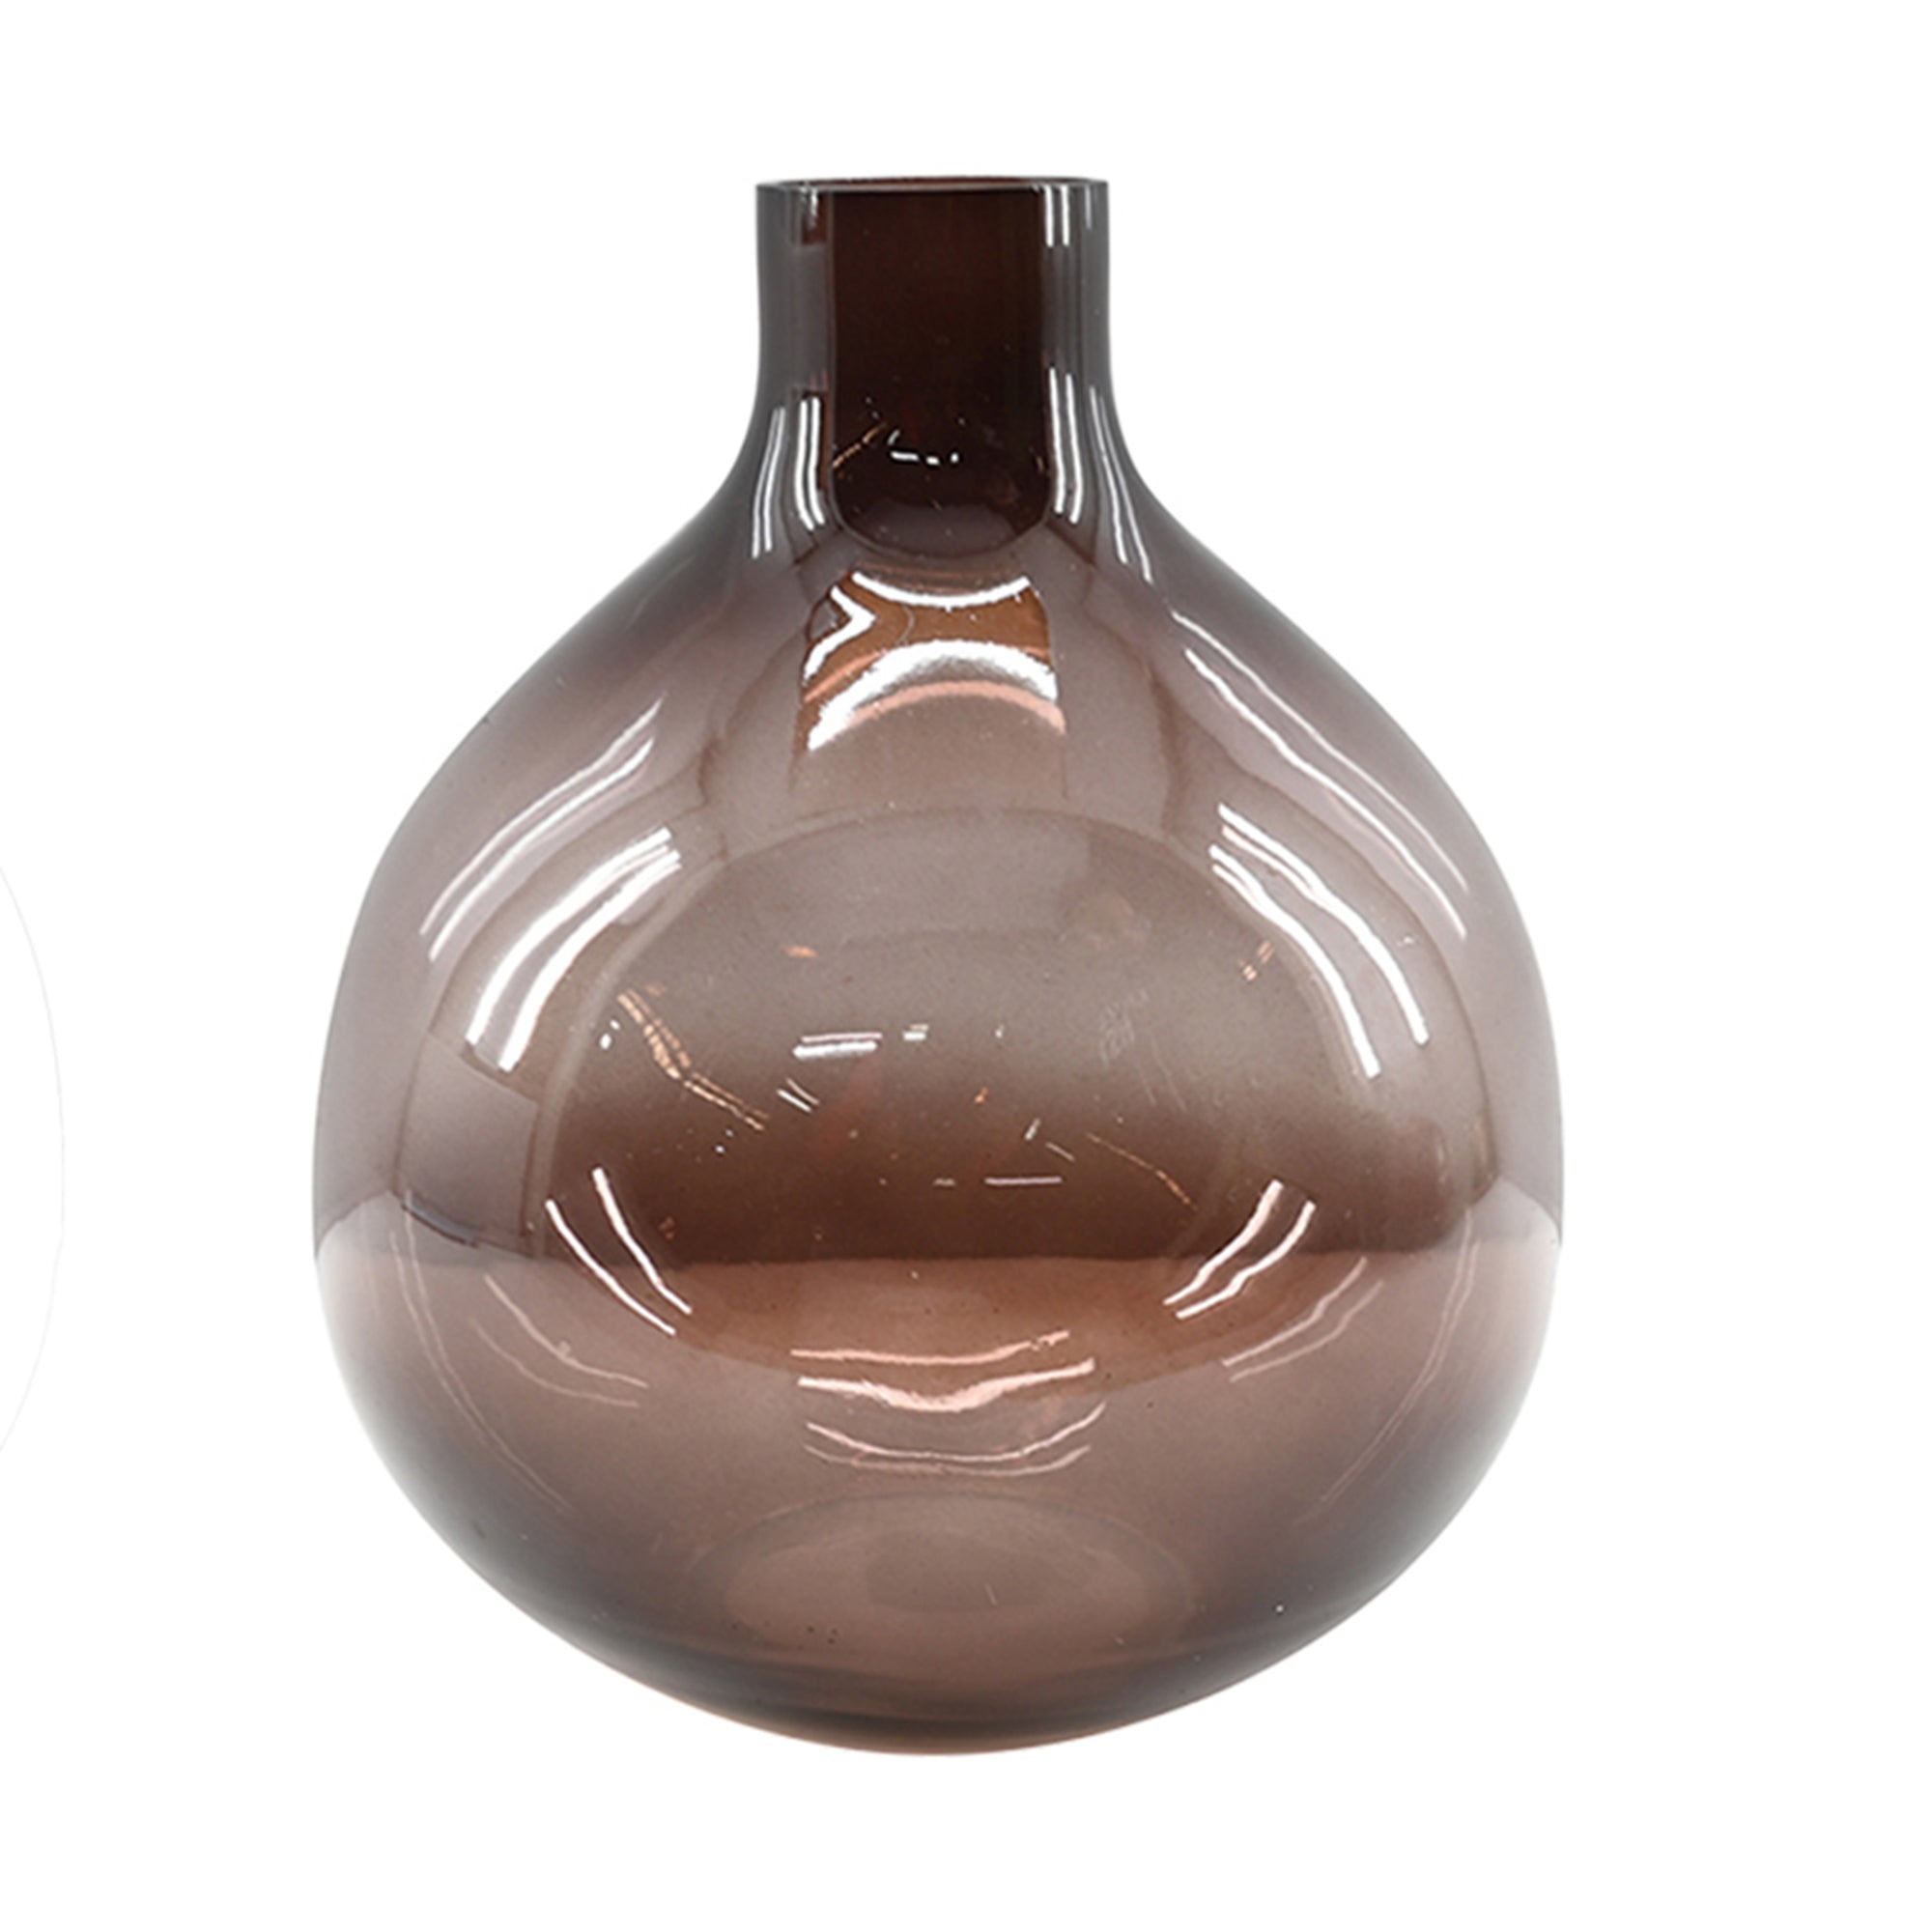 Caspian Handblown Glass Vase